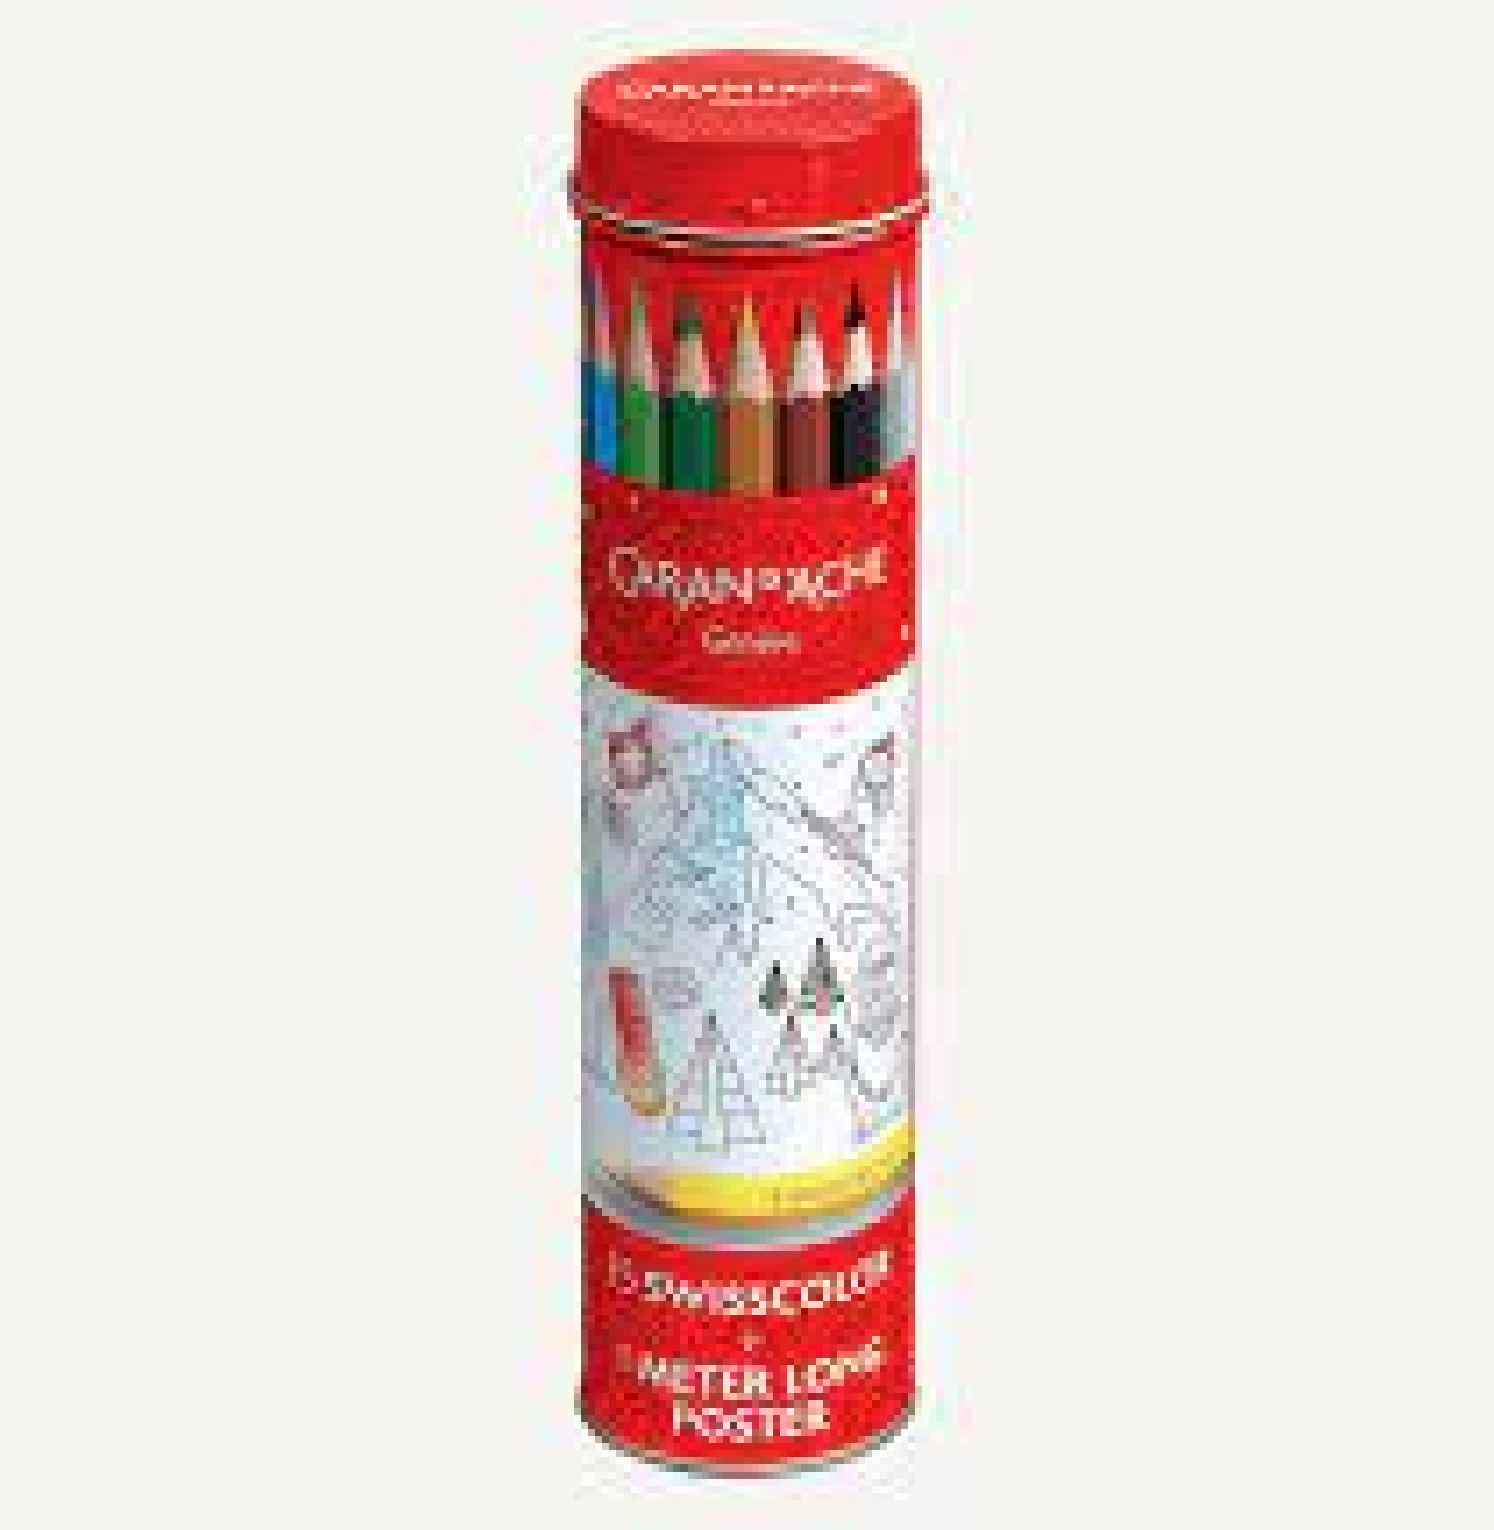 Caran D'Ache Swisscolor Colored Pencil Sets